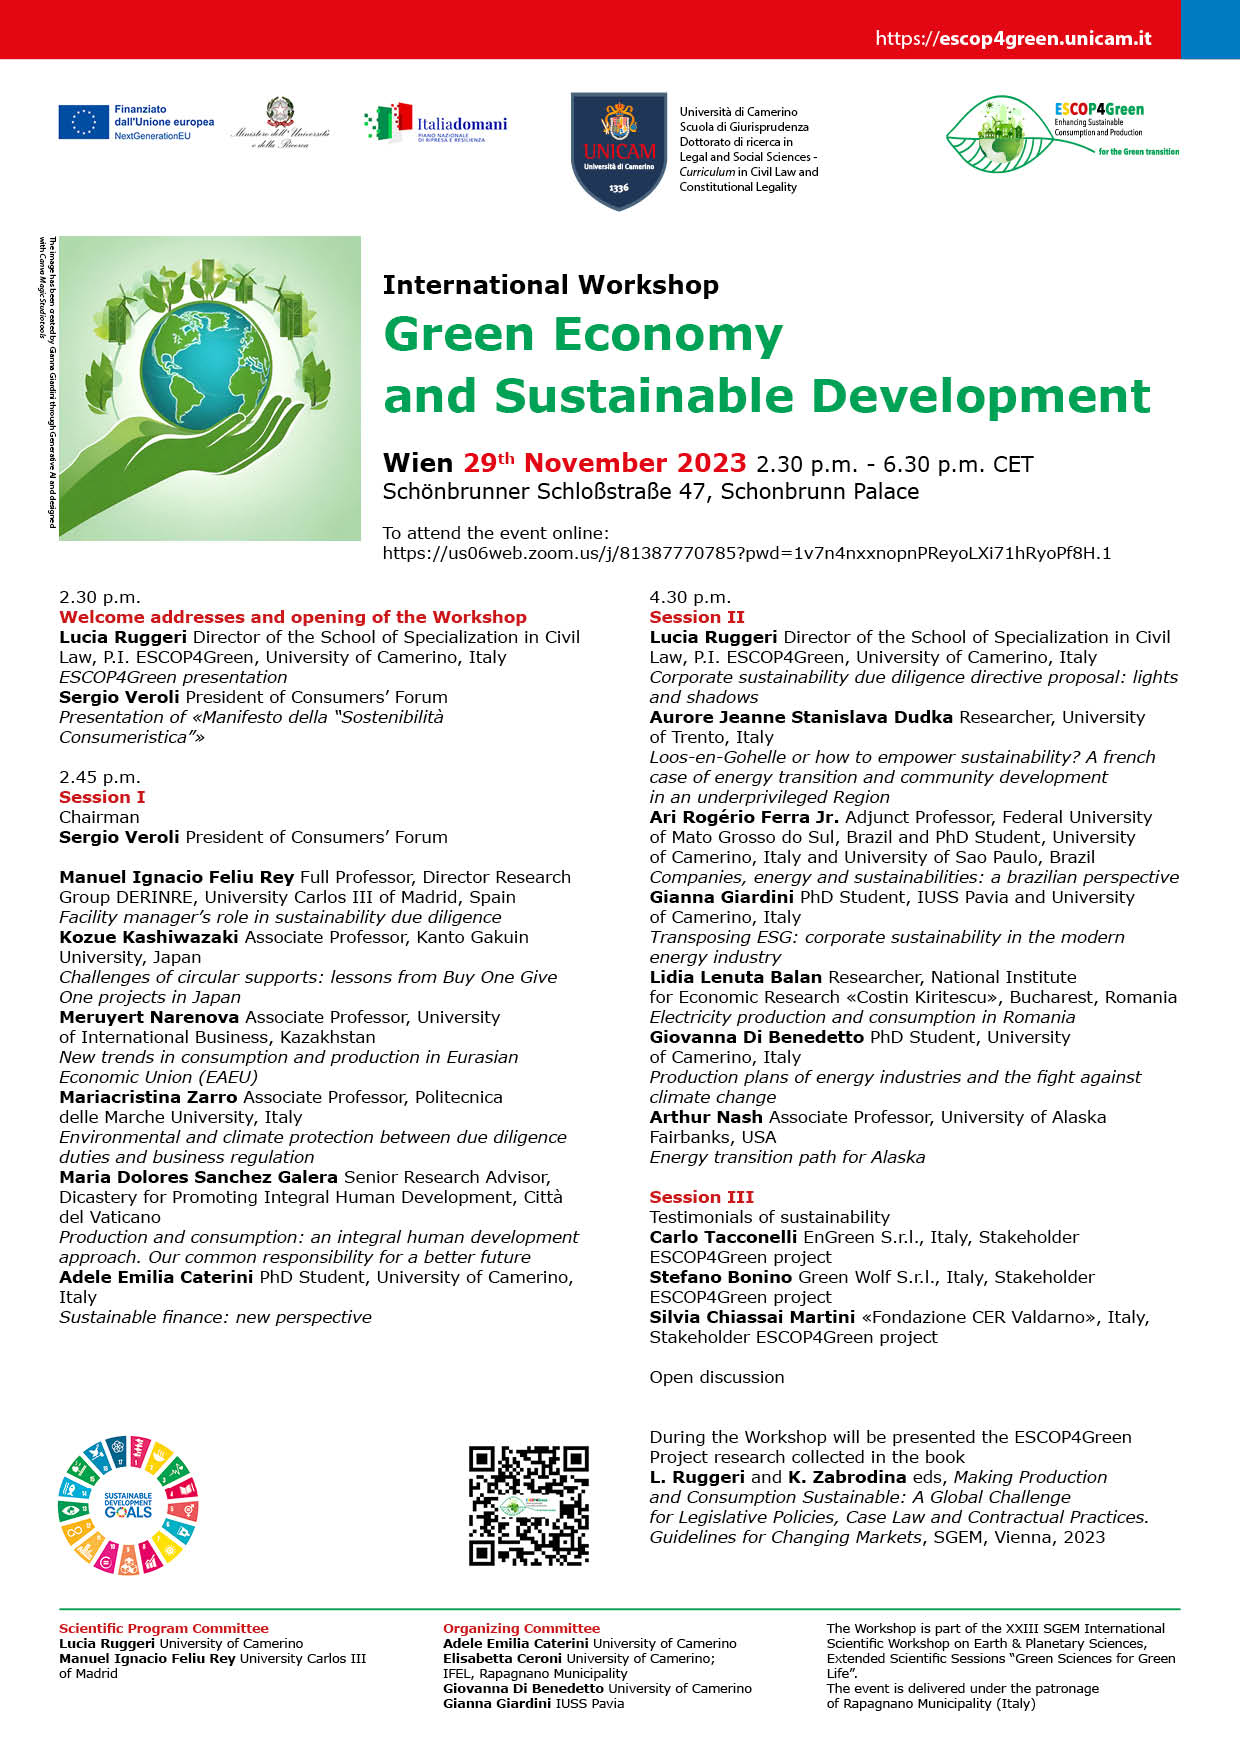 International Workshop "Green Economy and Sustainable Development"